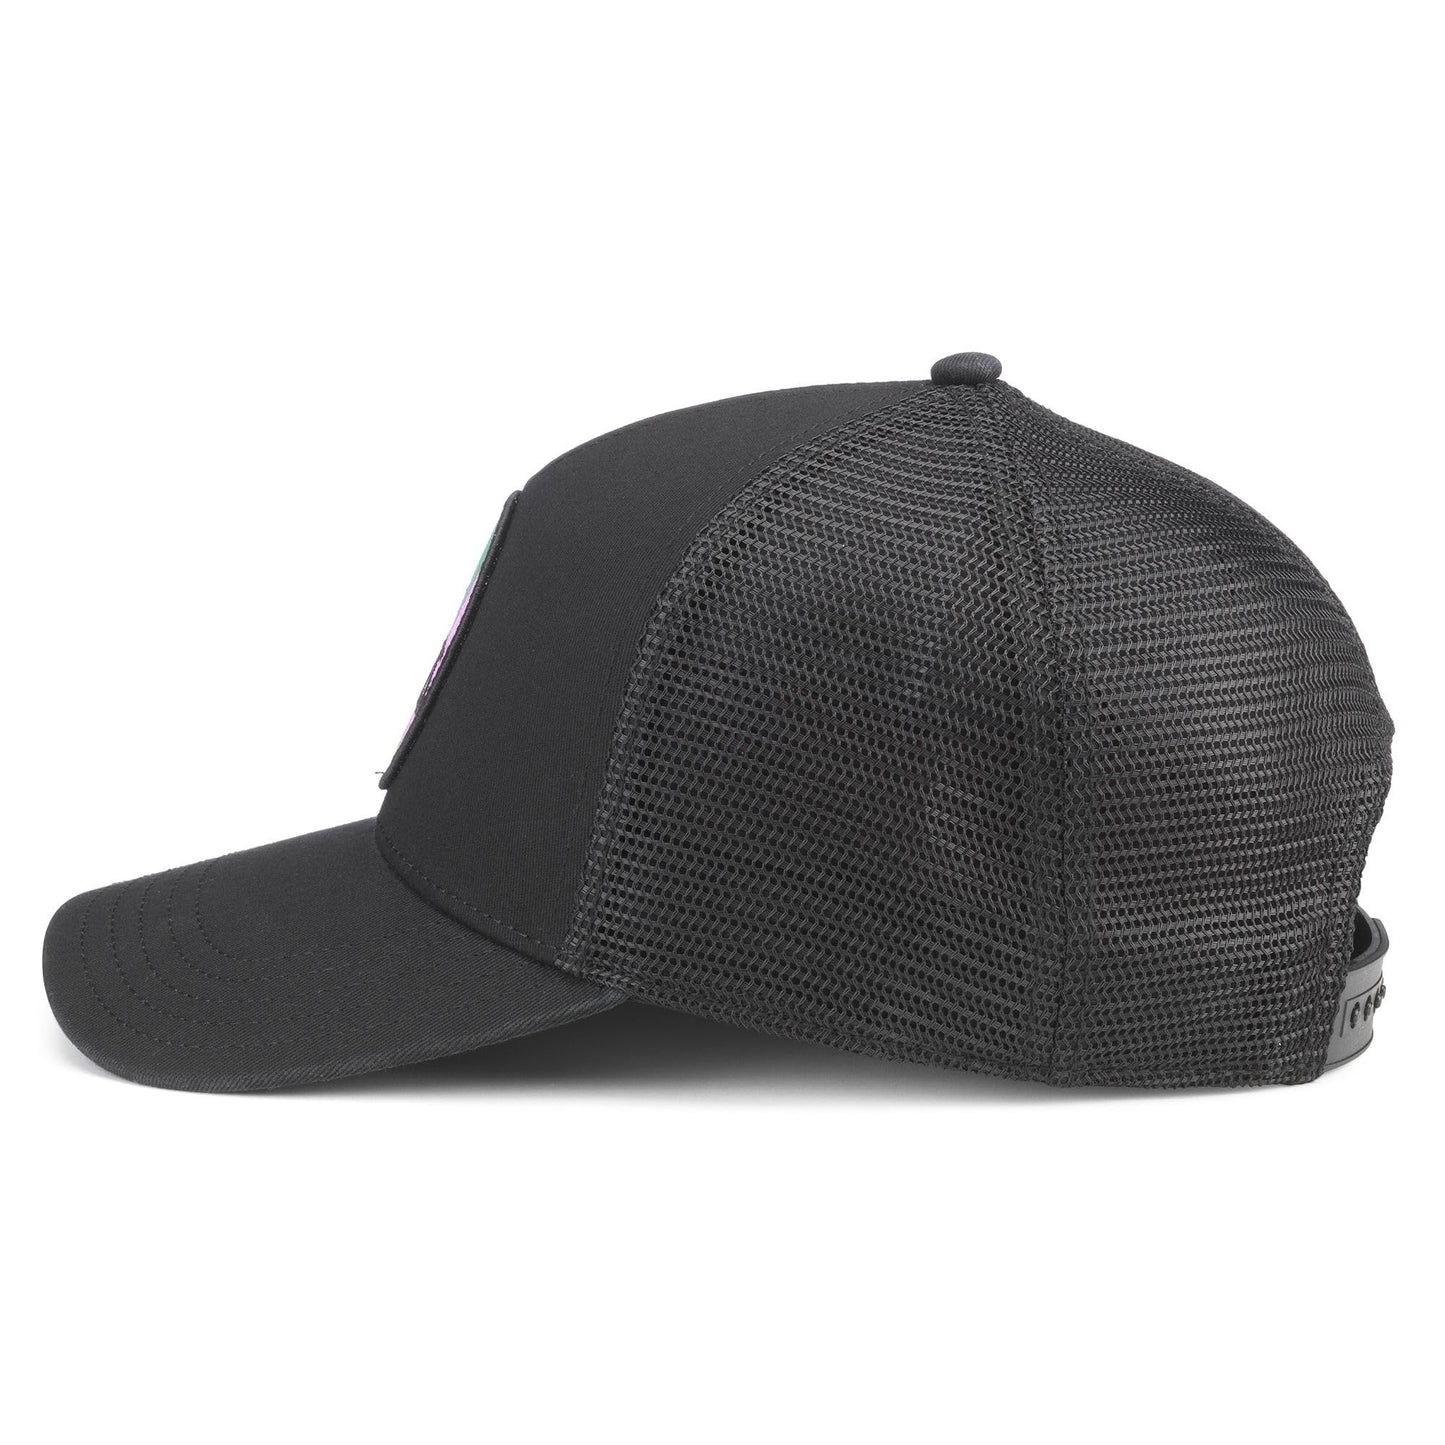 AMERICAN NEEDLE The Beatles Valin Adjustable Snapback Baseball Hat, Black (42960A-BEATLES-BLK)